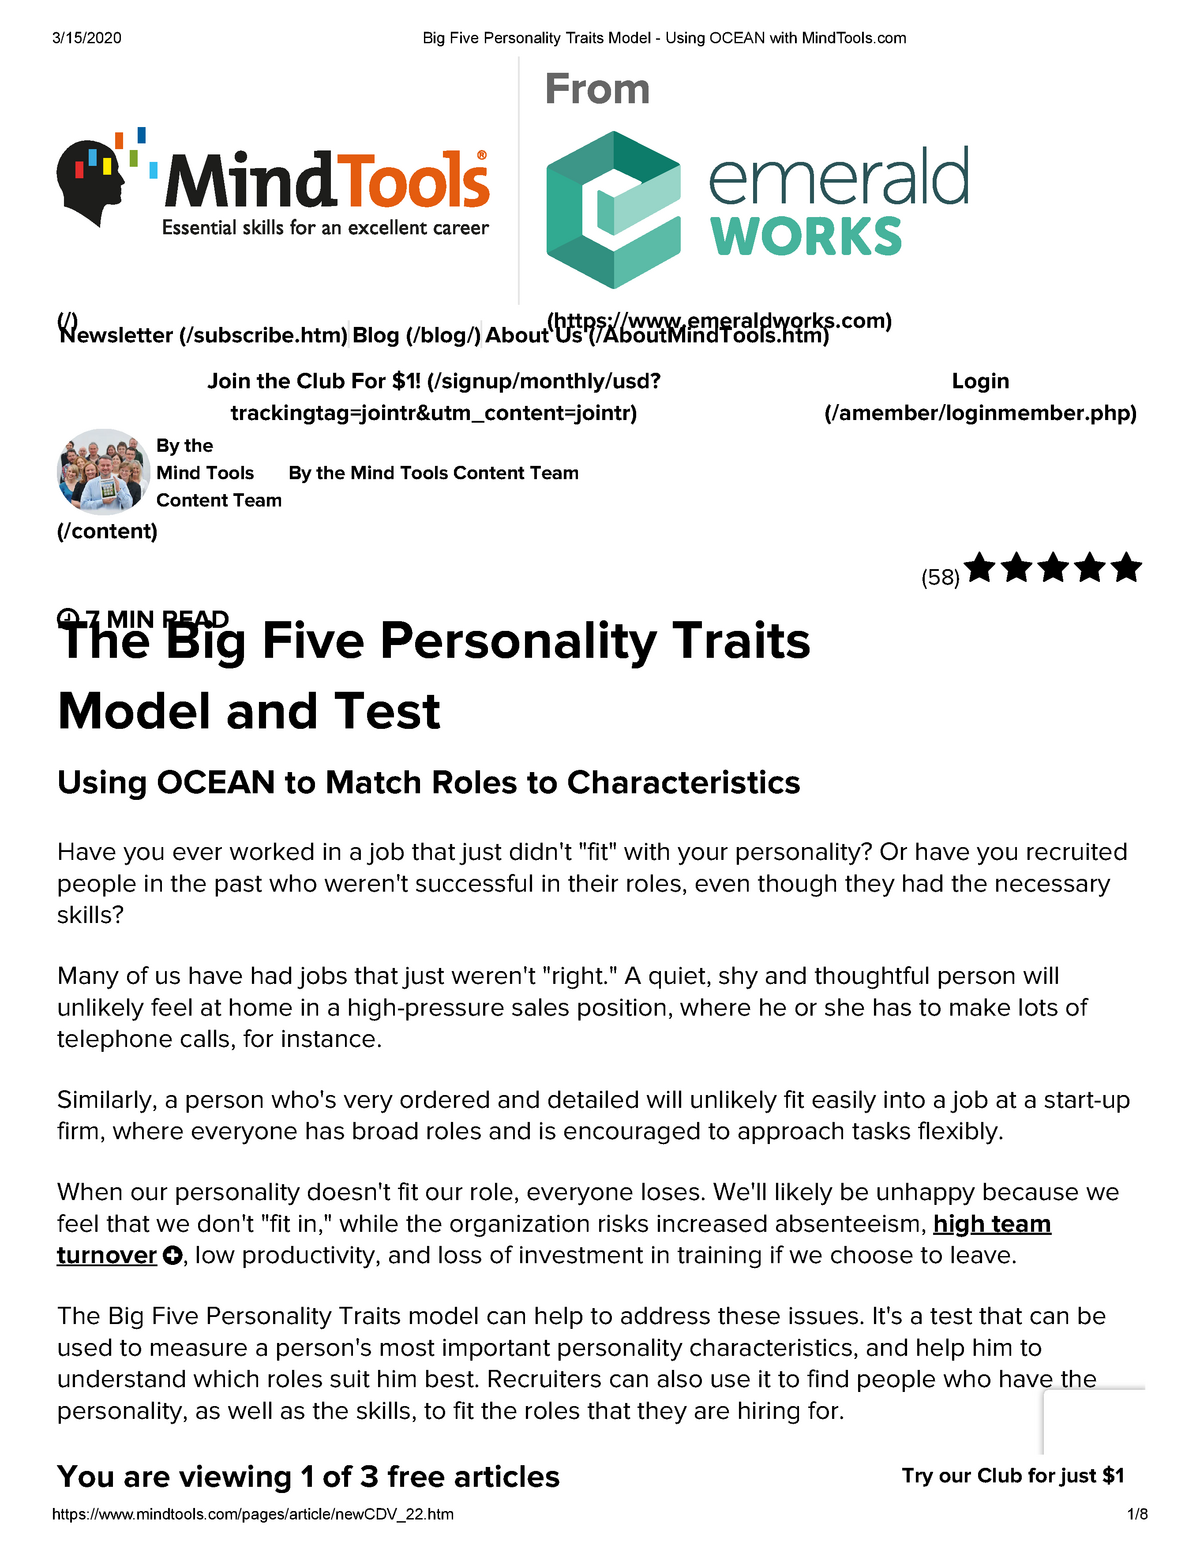 Big Five Personality Traits Model - Using Ocean with Mind Tools - StuDocu